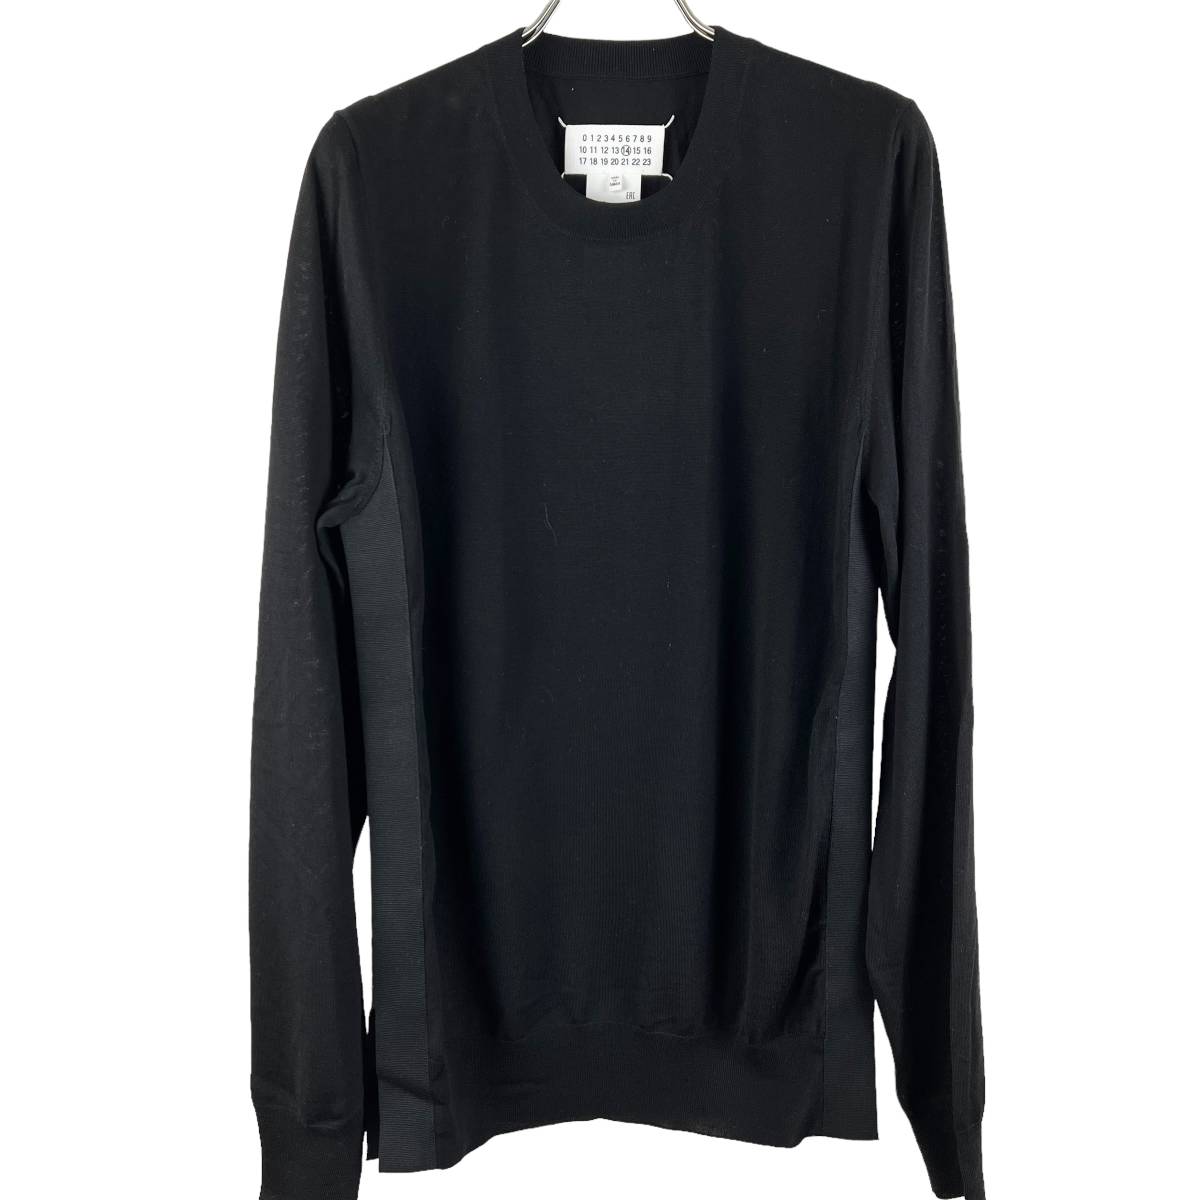 Maison Margiela (メゾン マルジェラ) Stretch Fork Waist Knit Longsleeve T Shirt (black)